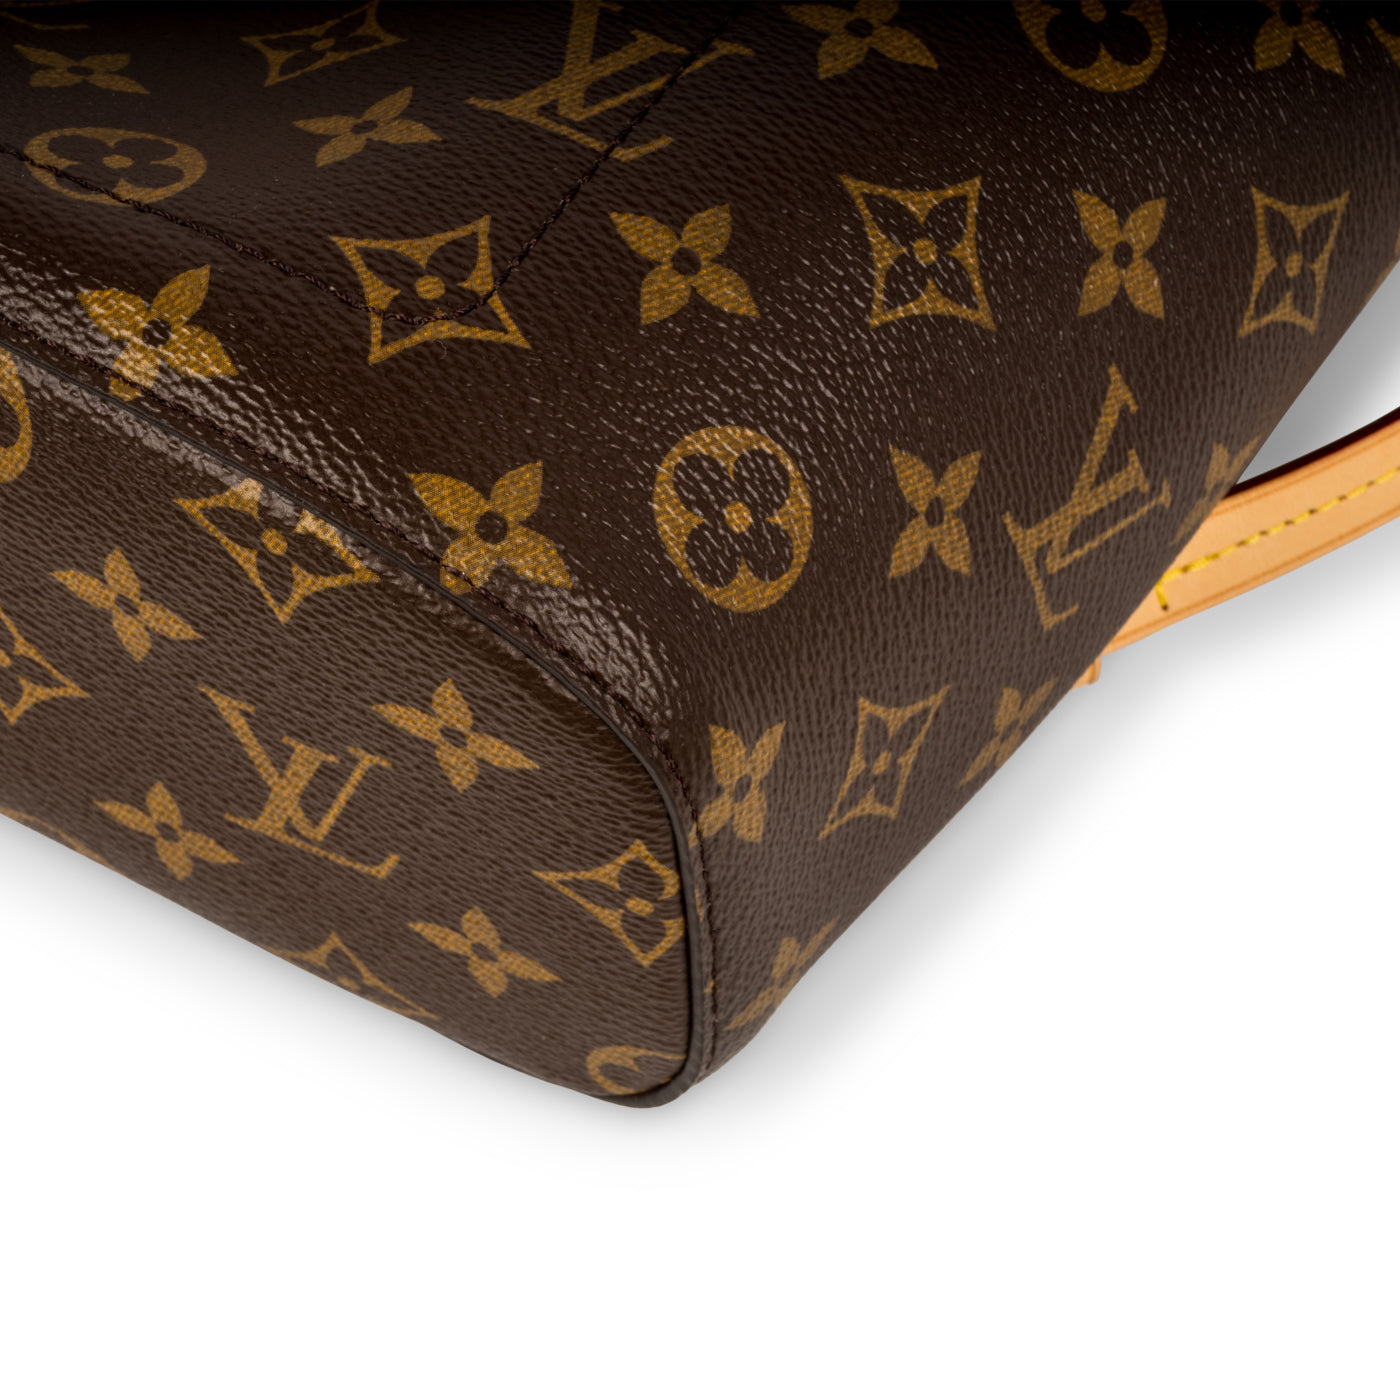 Louis Vuitton, Bags, Beautiful Authentic Lv Backpack Montsouris Gm  Monogram